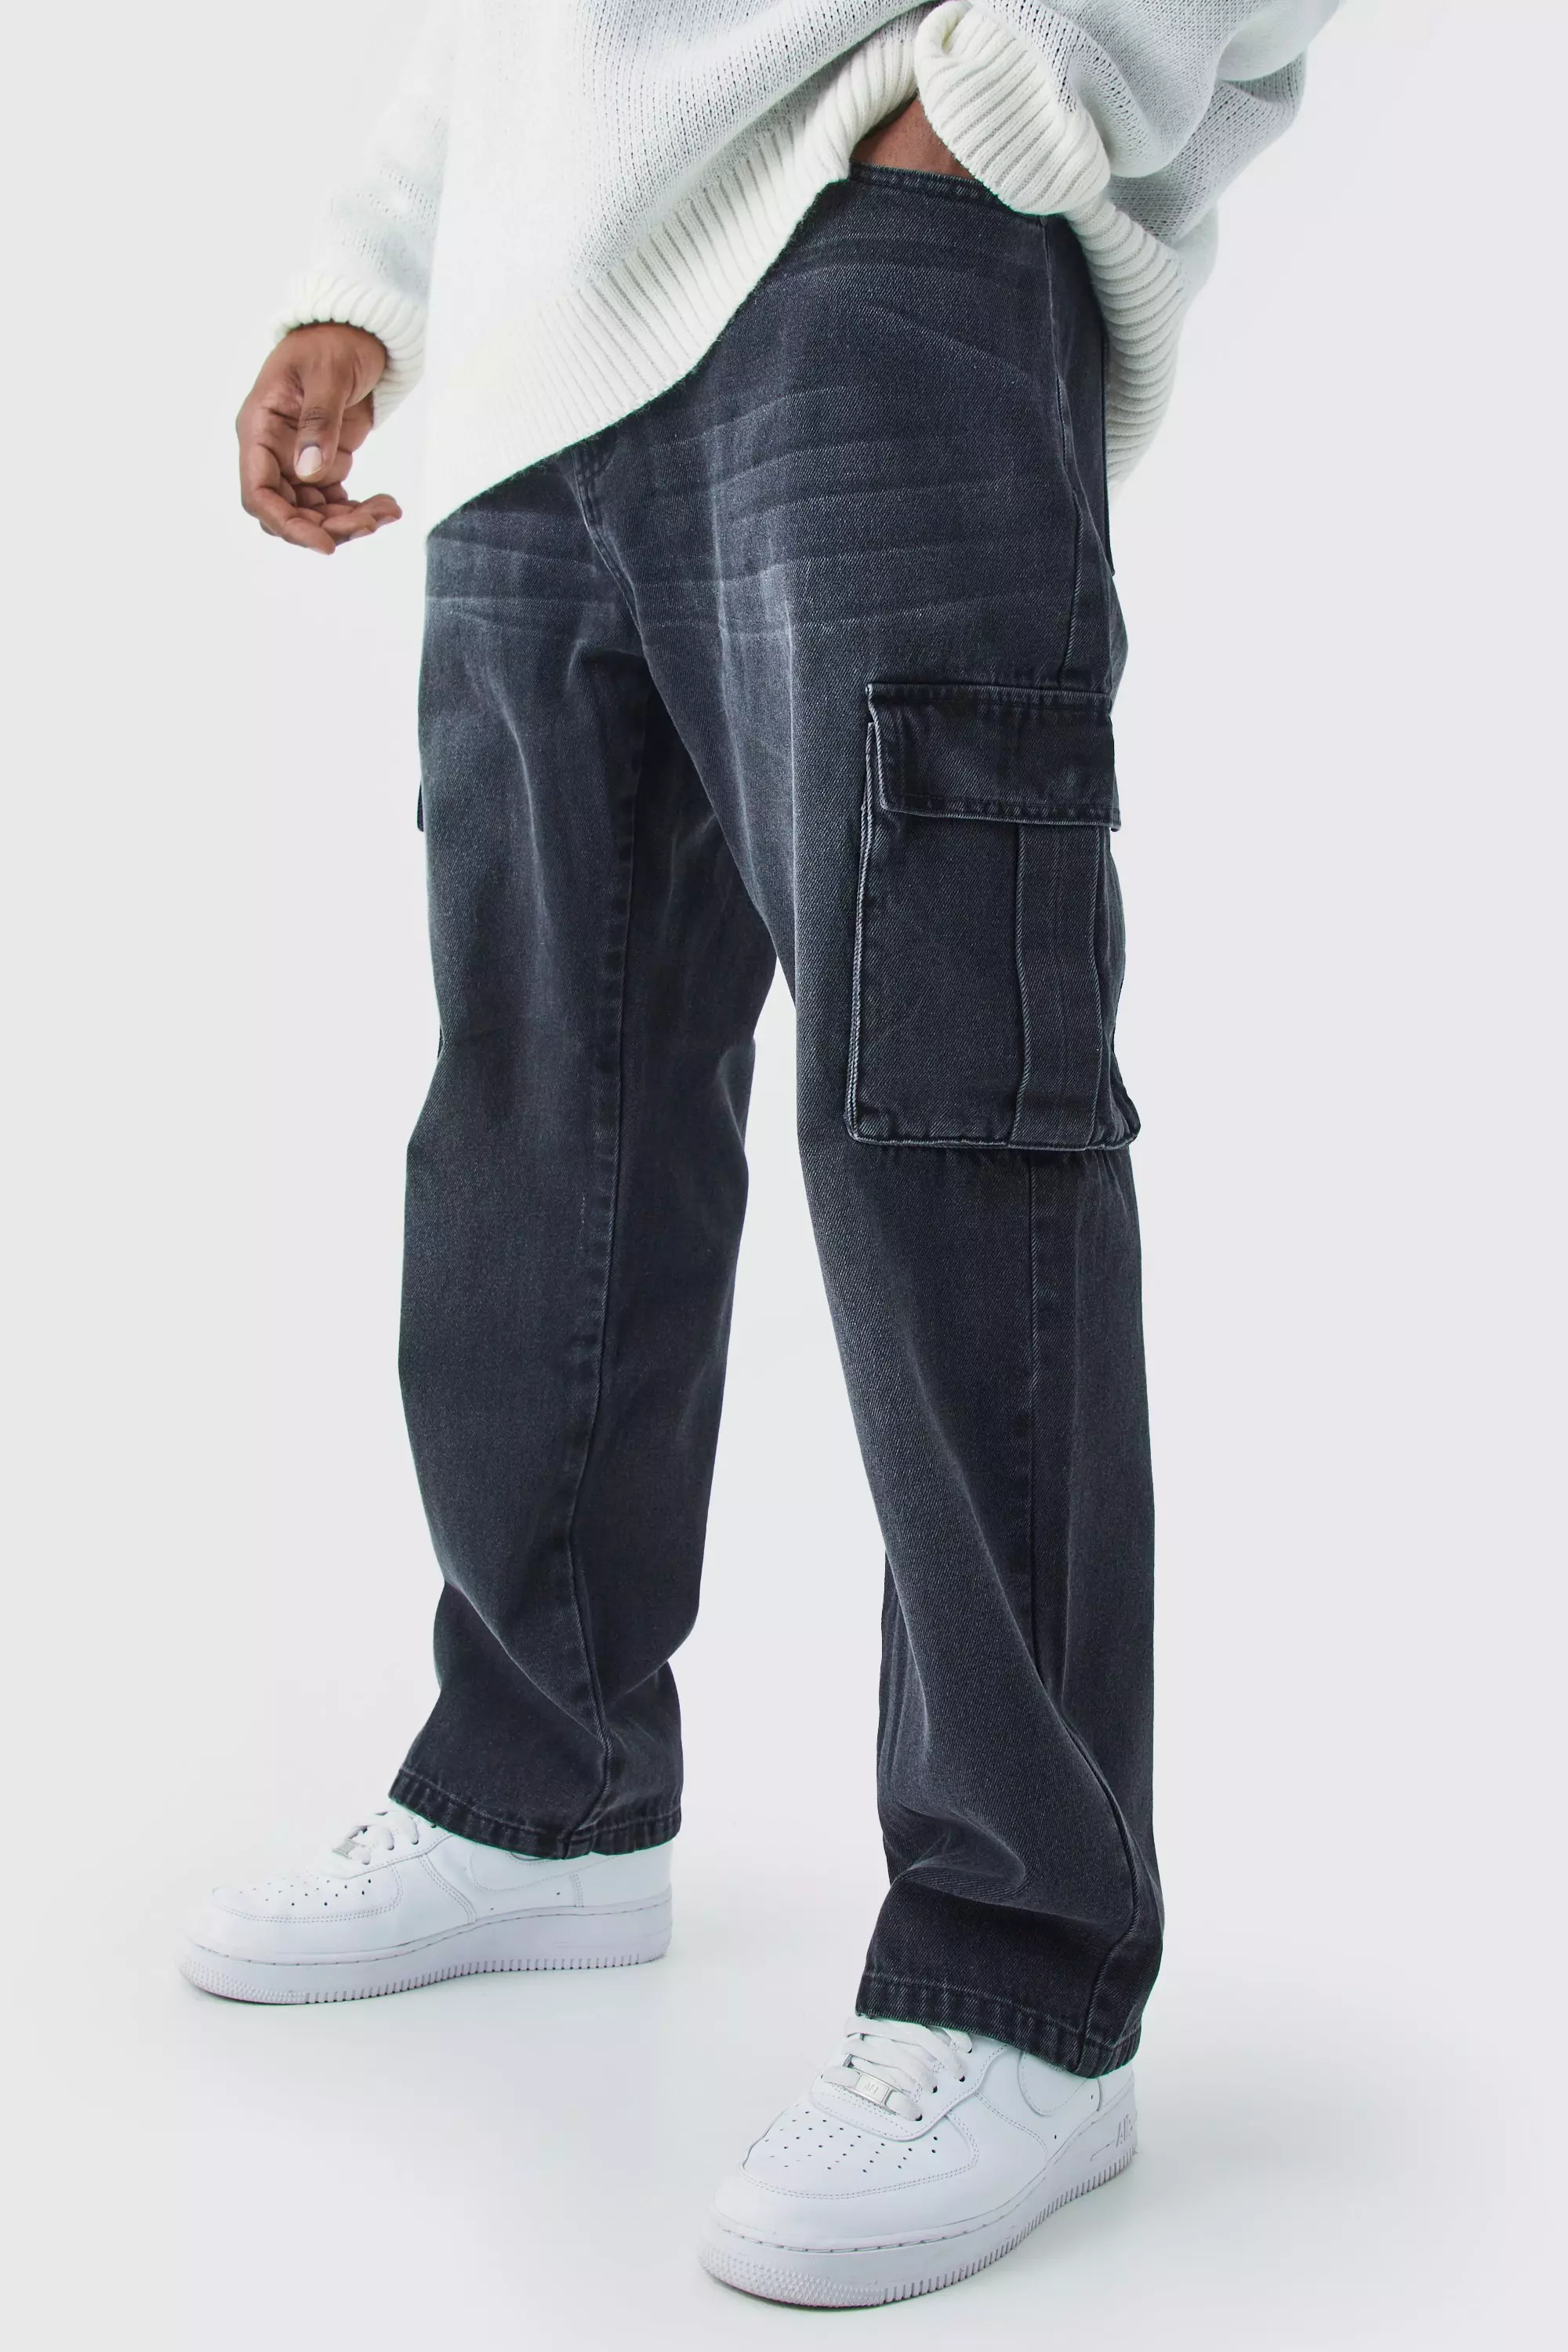 Tall Straight Leg Side Zip Hem Cargo Jeans